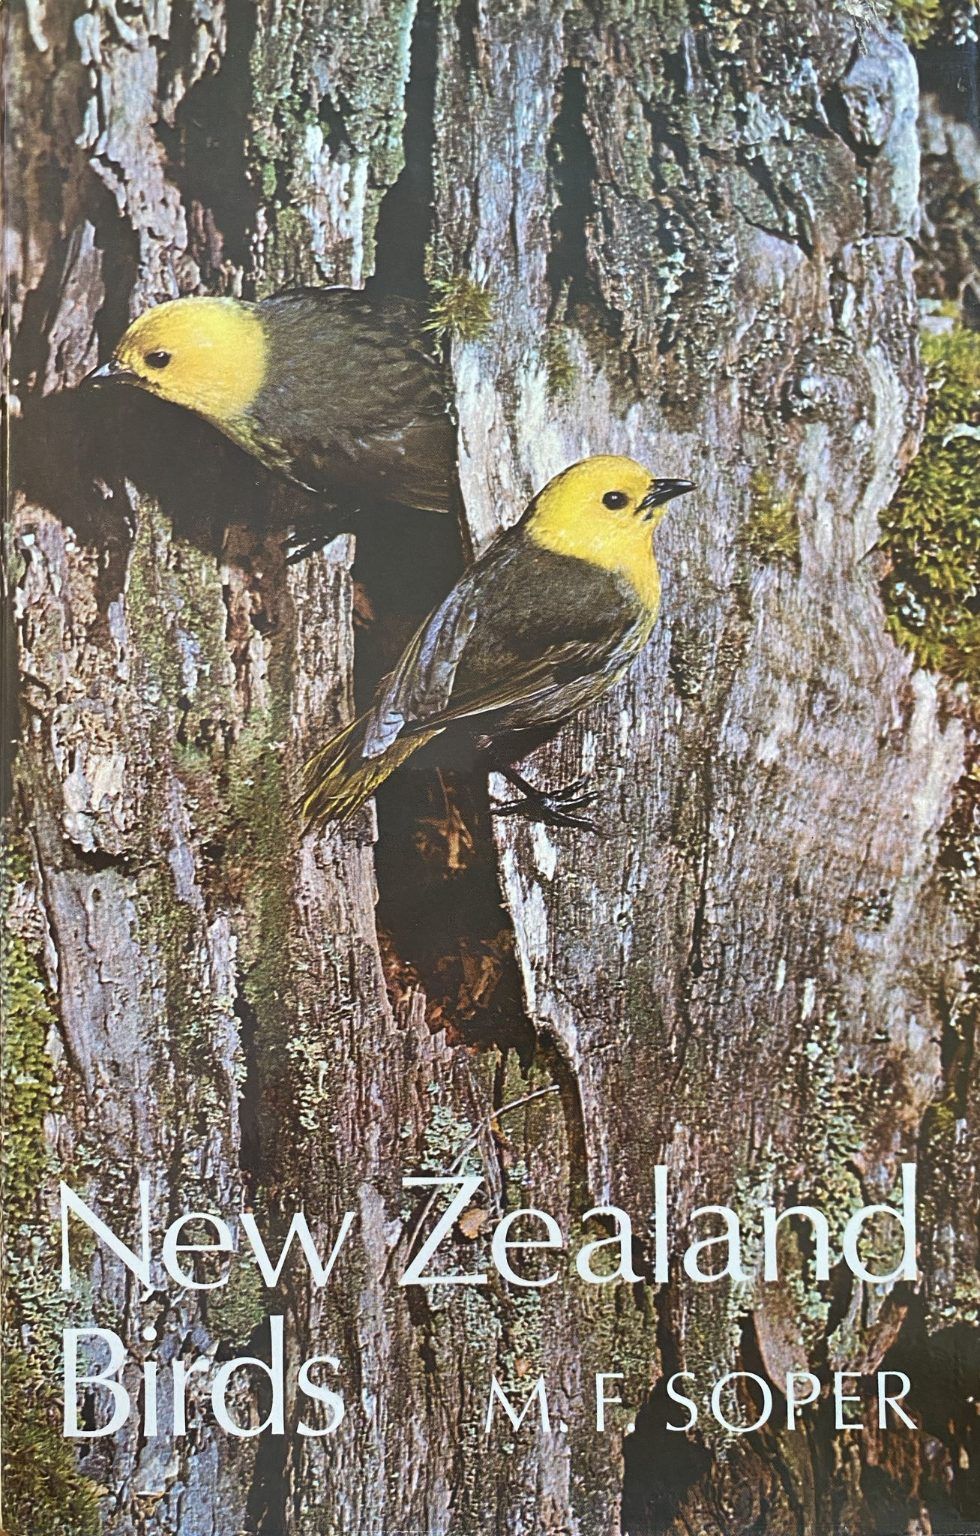 NEW ZEALAND BIRDS